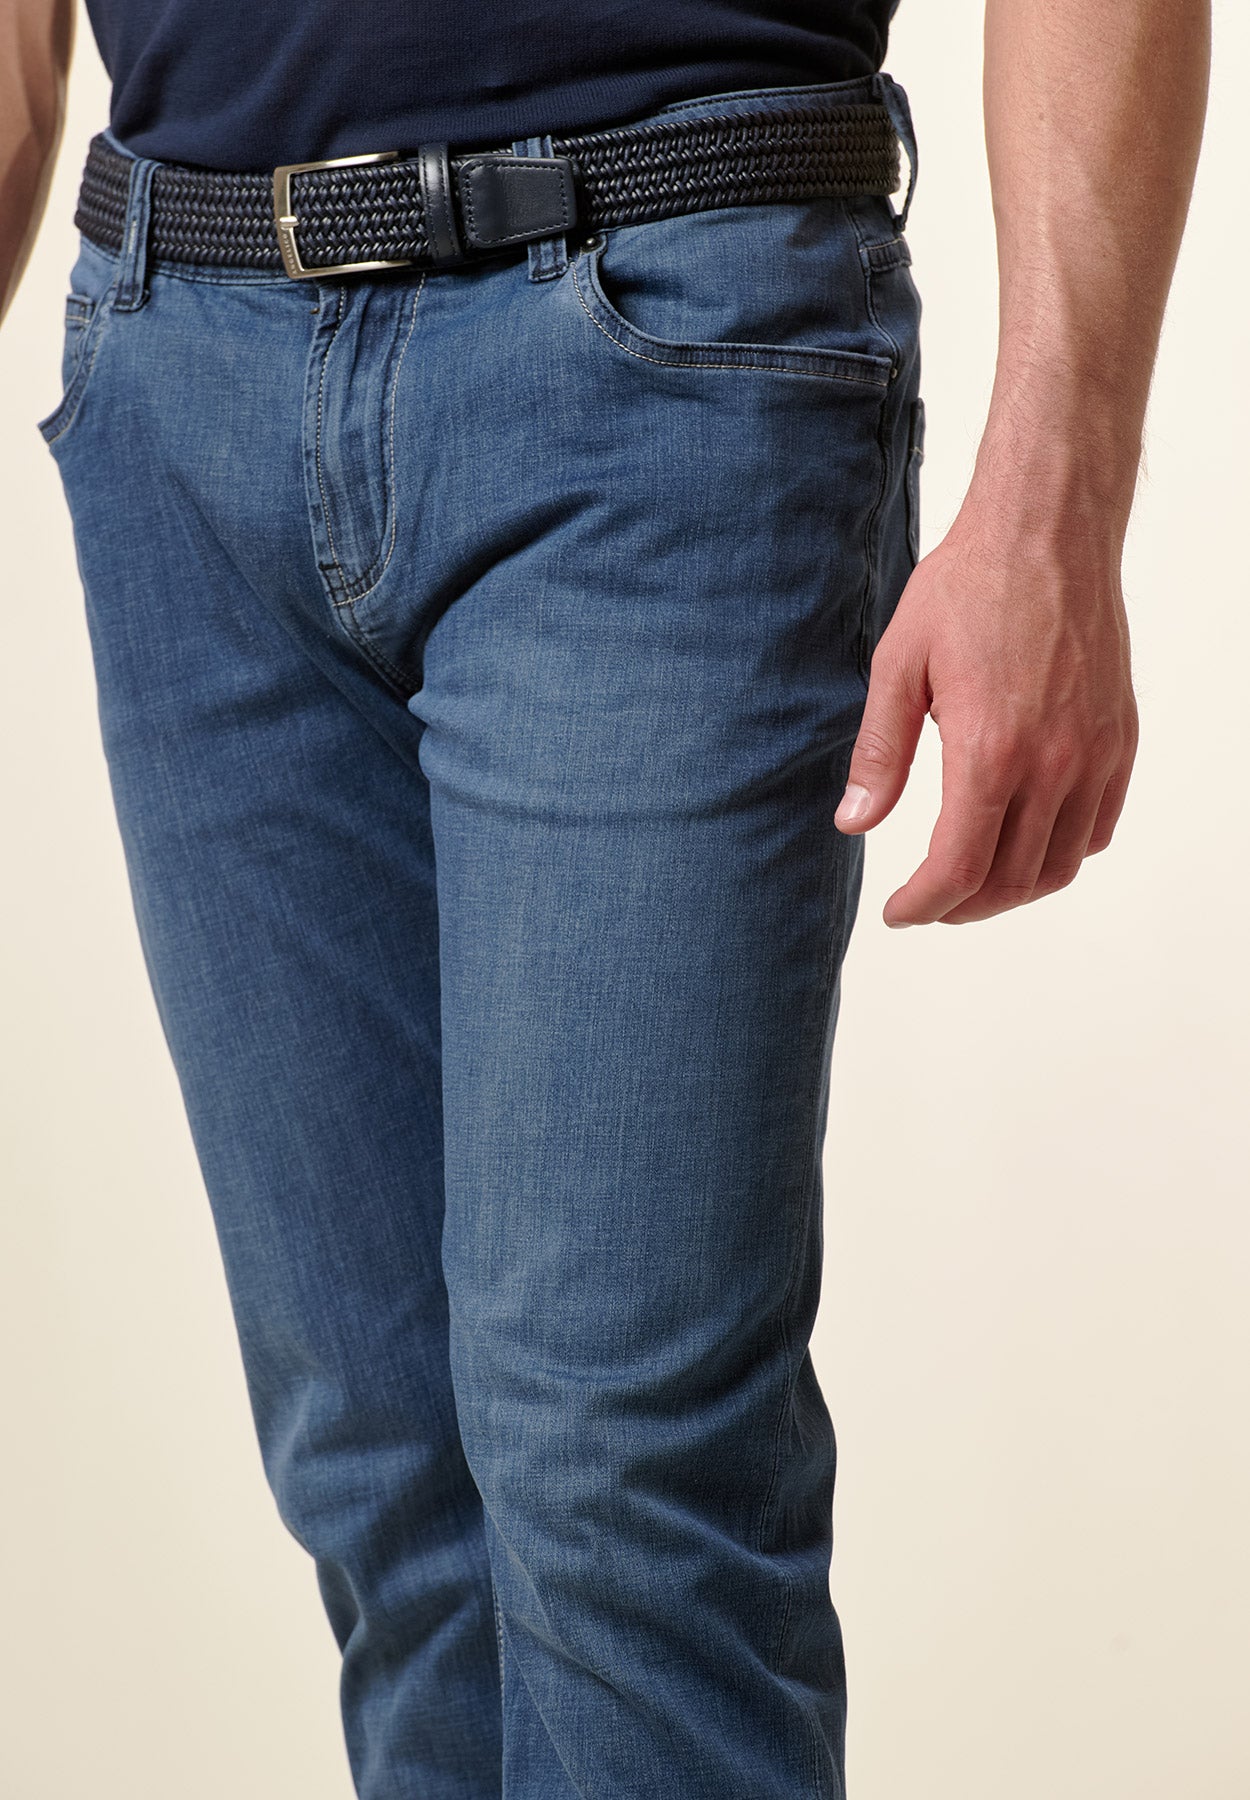 Five-pocket custom fit jeans